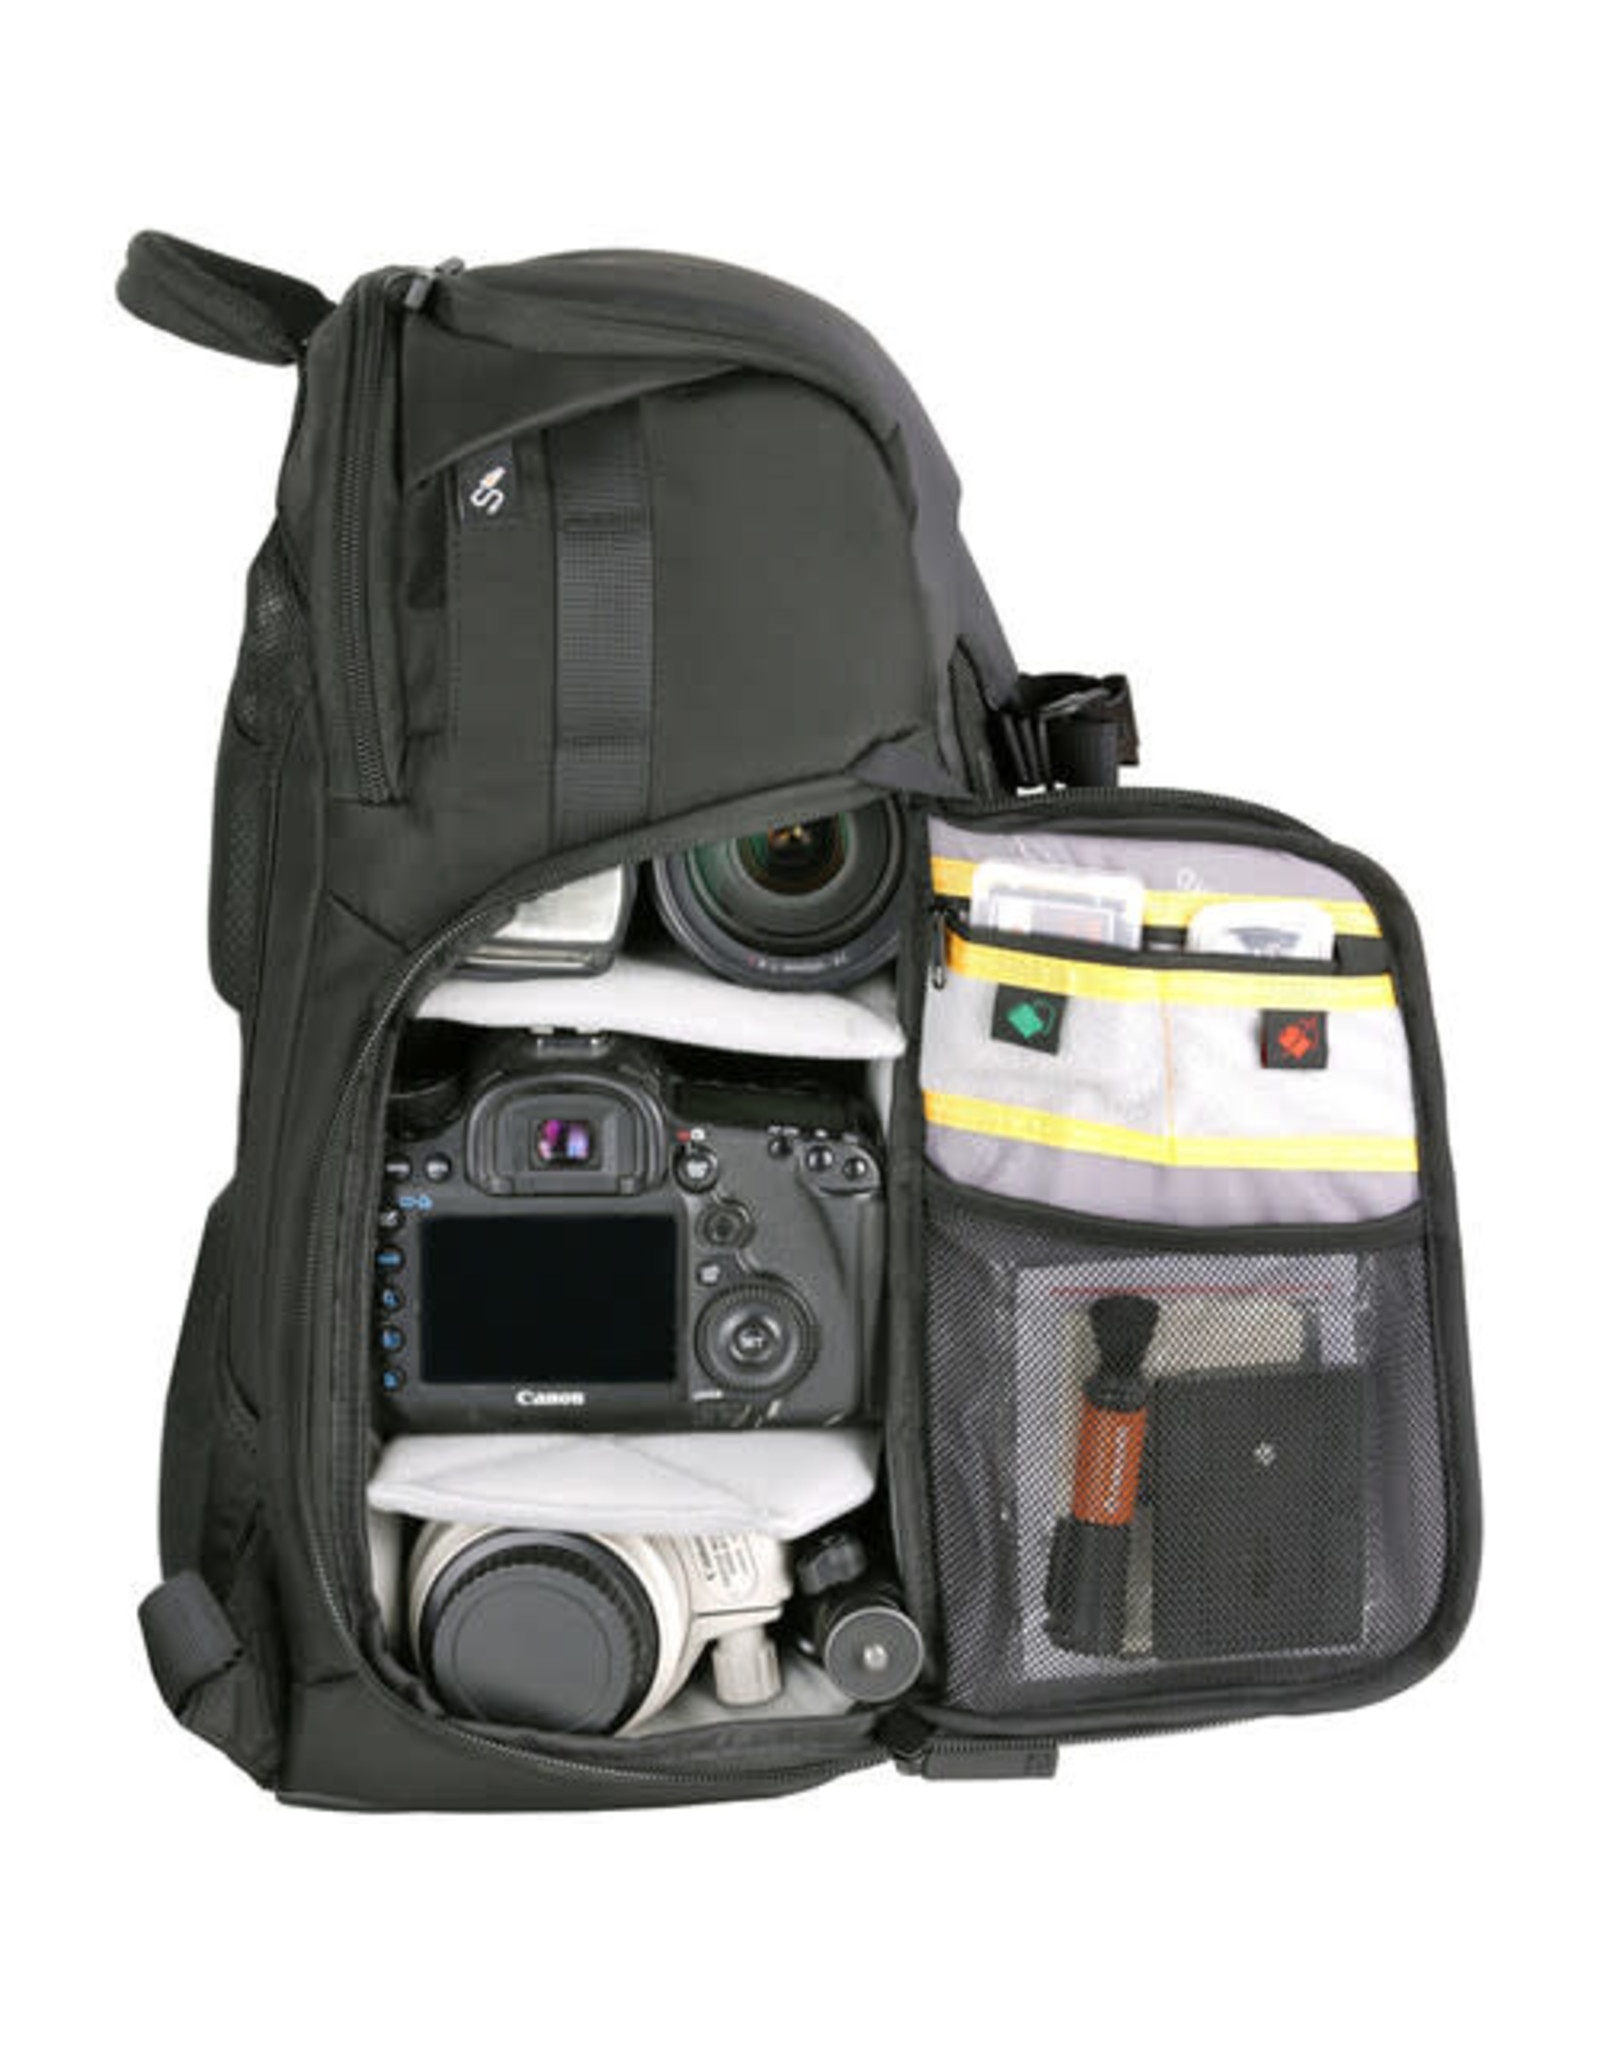 Vanguard Vanguard VEO Adapter S41 Camera Backpack (CHOOSE COLOR)